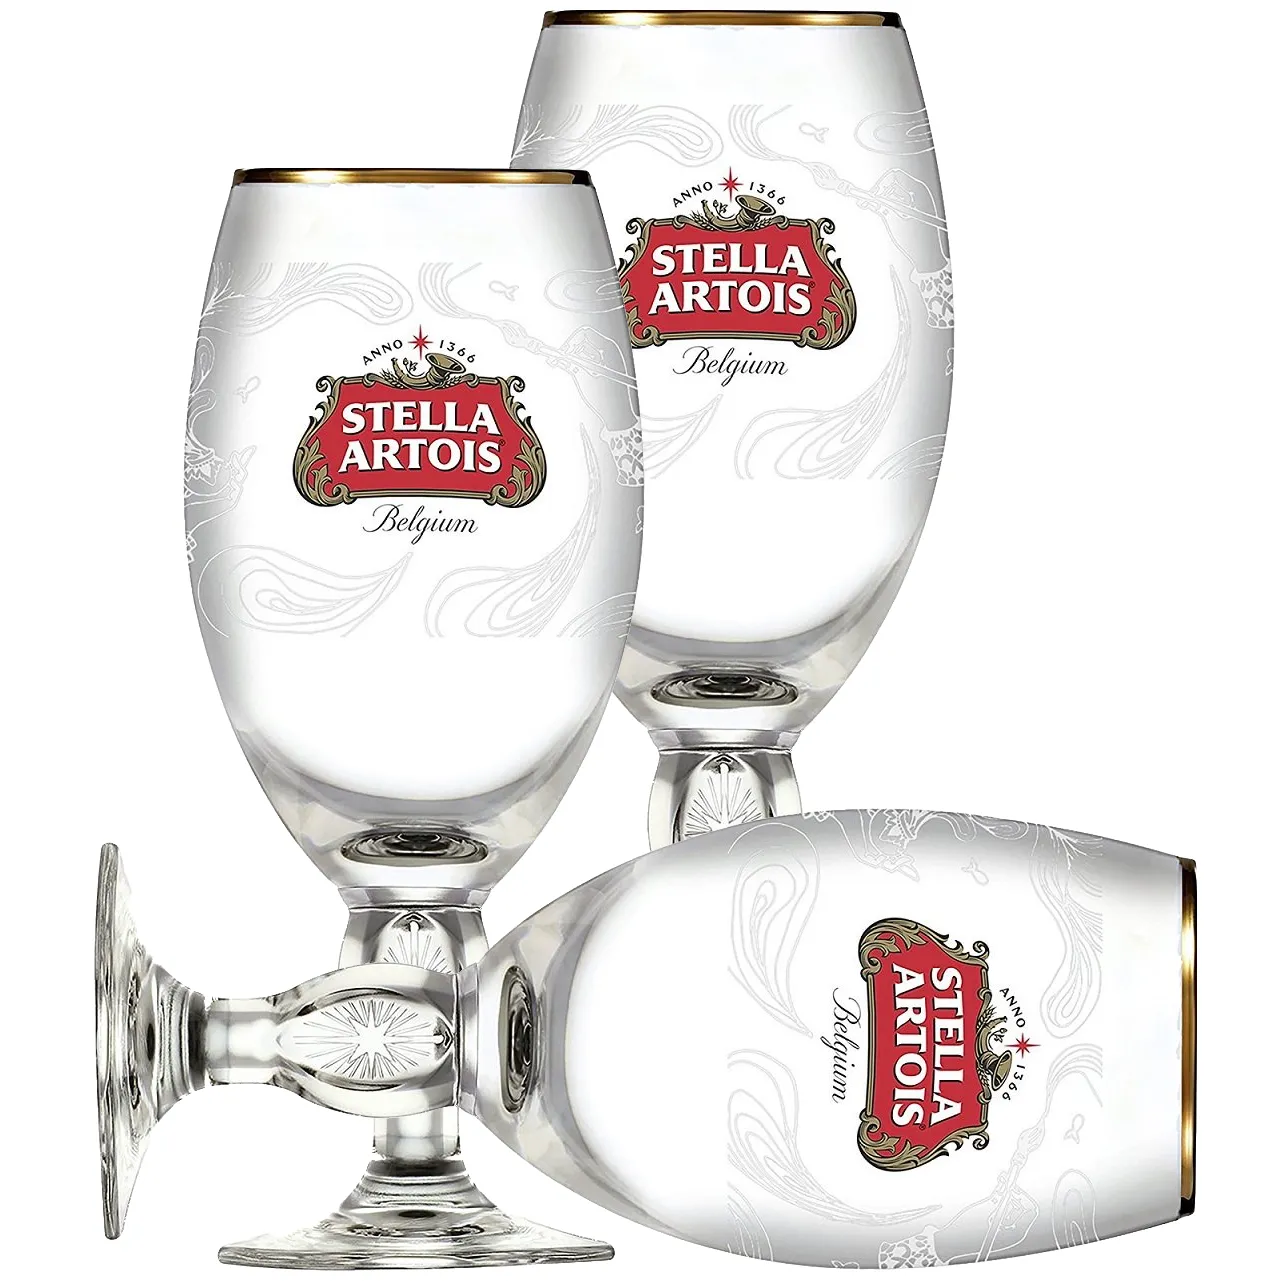 Free Pair Of Stella Artois Glasses